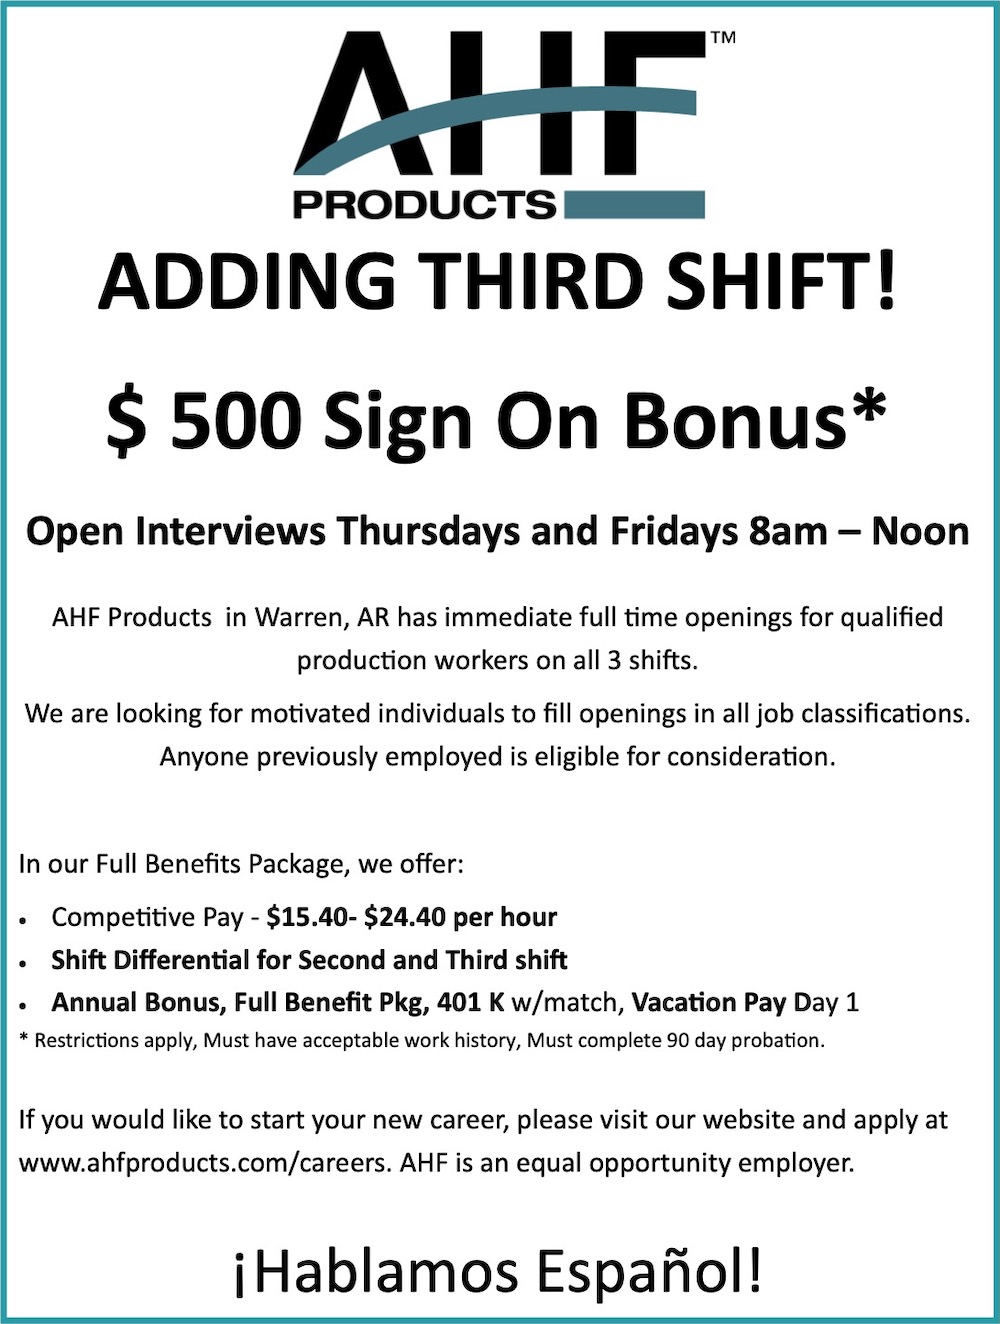 AHF Products-Adding Third Shift!-$500 Sign on Bonus*